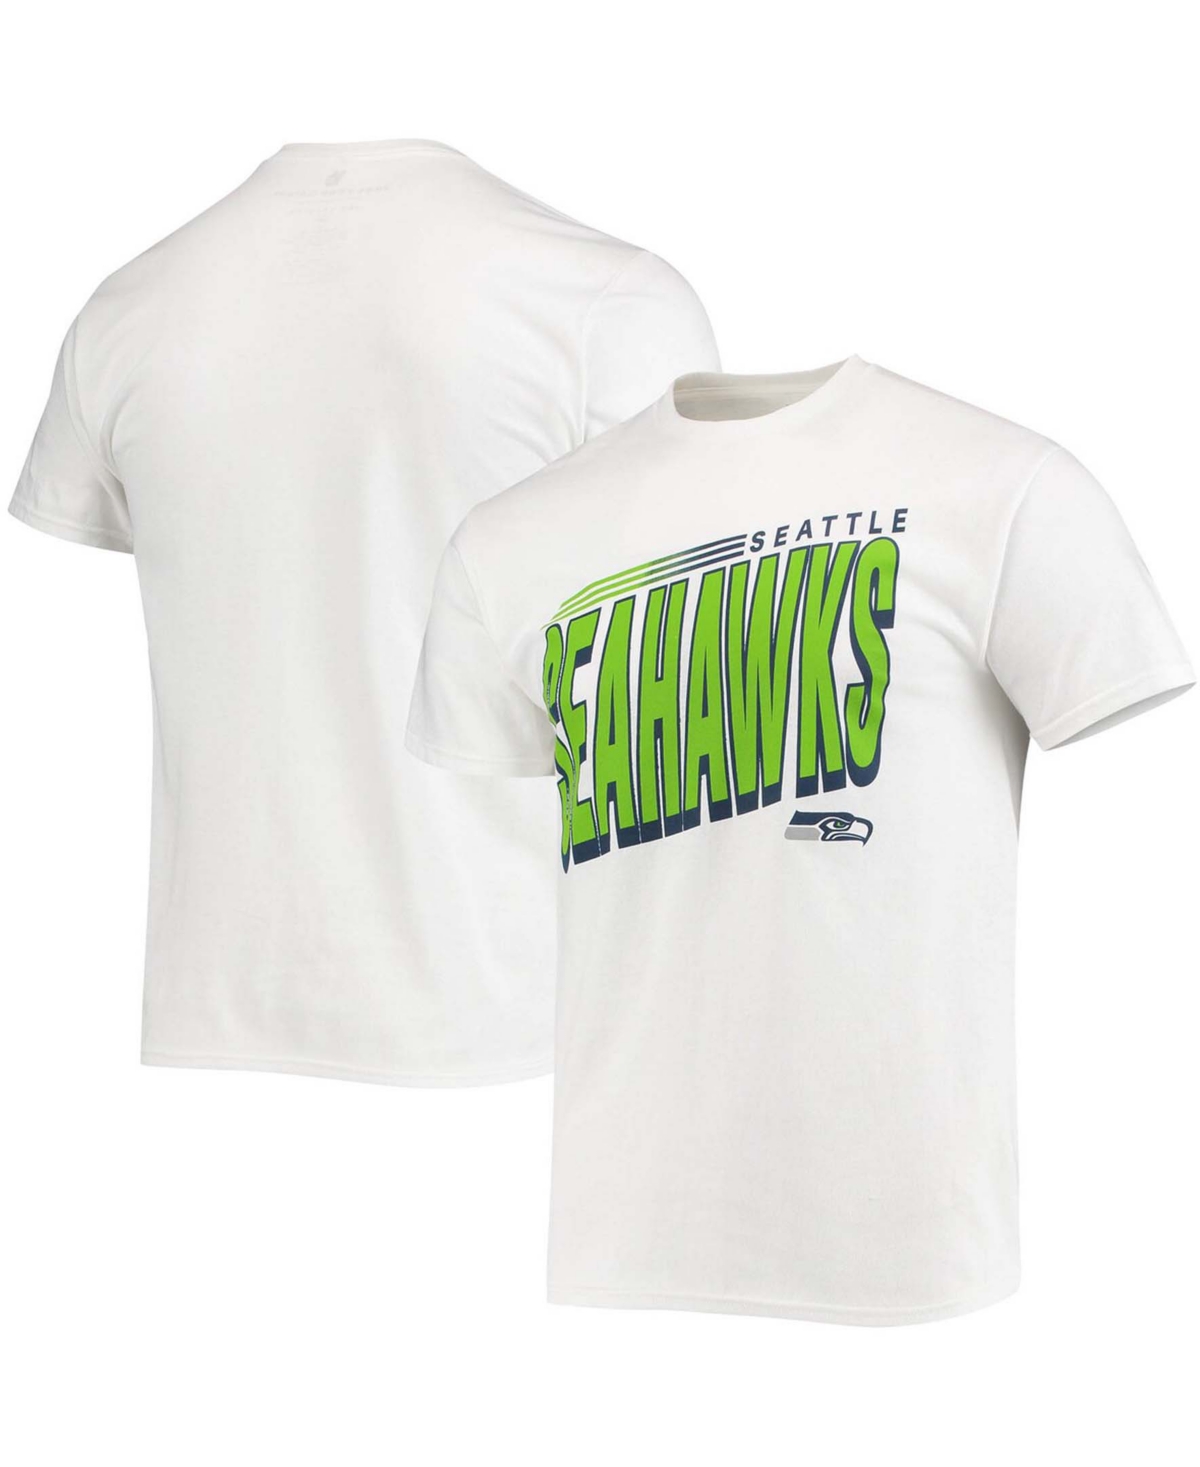 Men's White Seattle Seahawks Hail Mary T-shirt - White